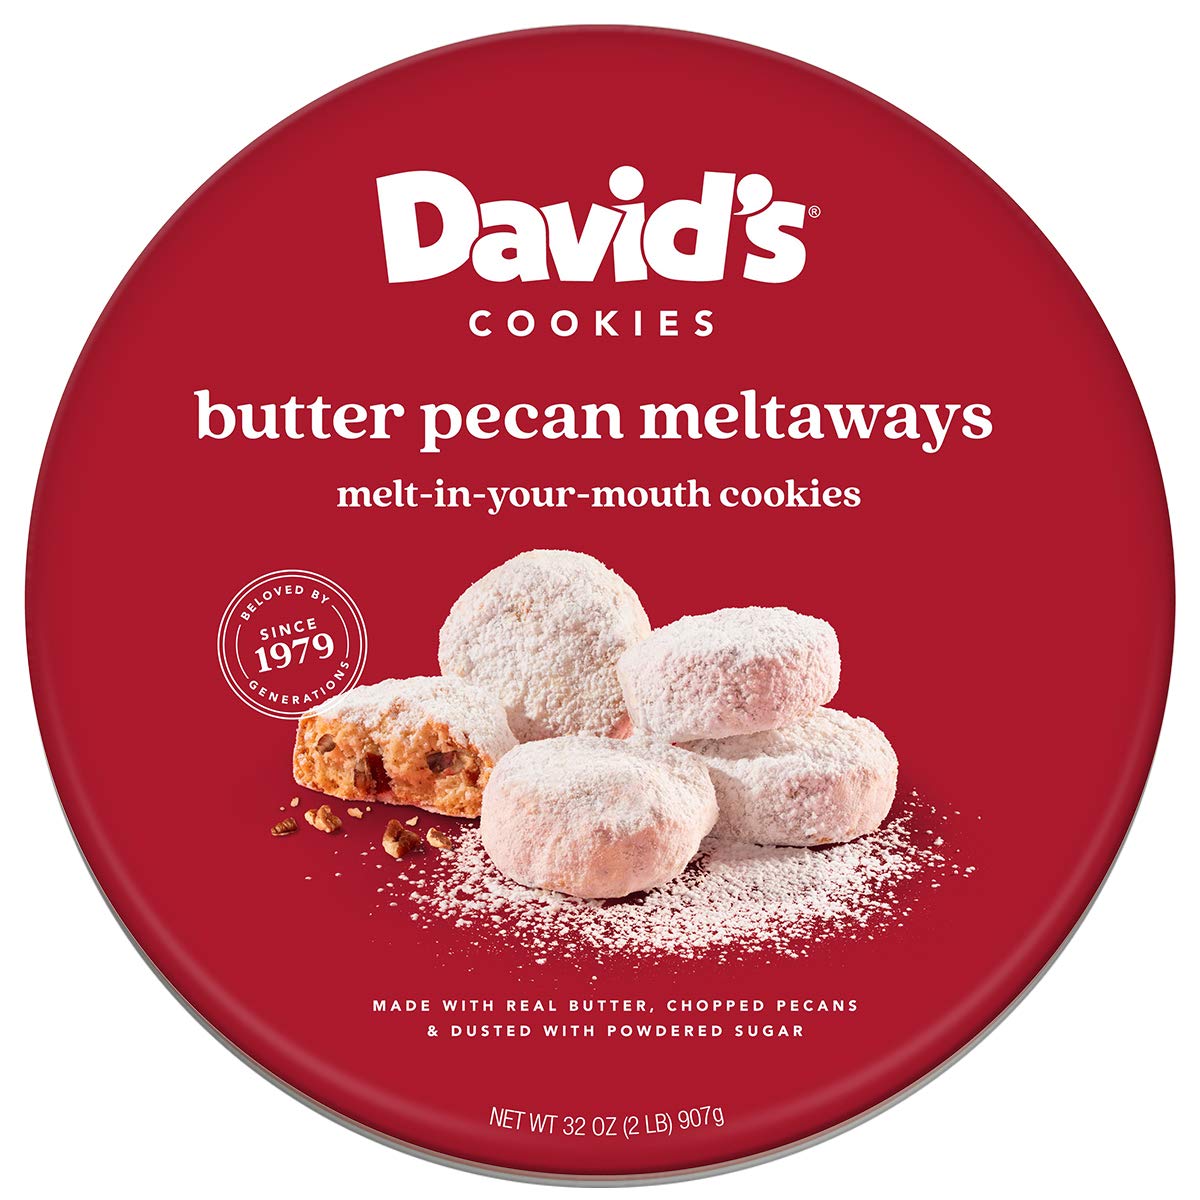 David’s Butter Pecan Meltaway Cookies – 32oz | $10.99 at Amazon